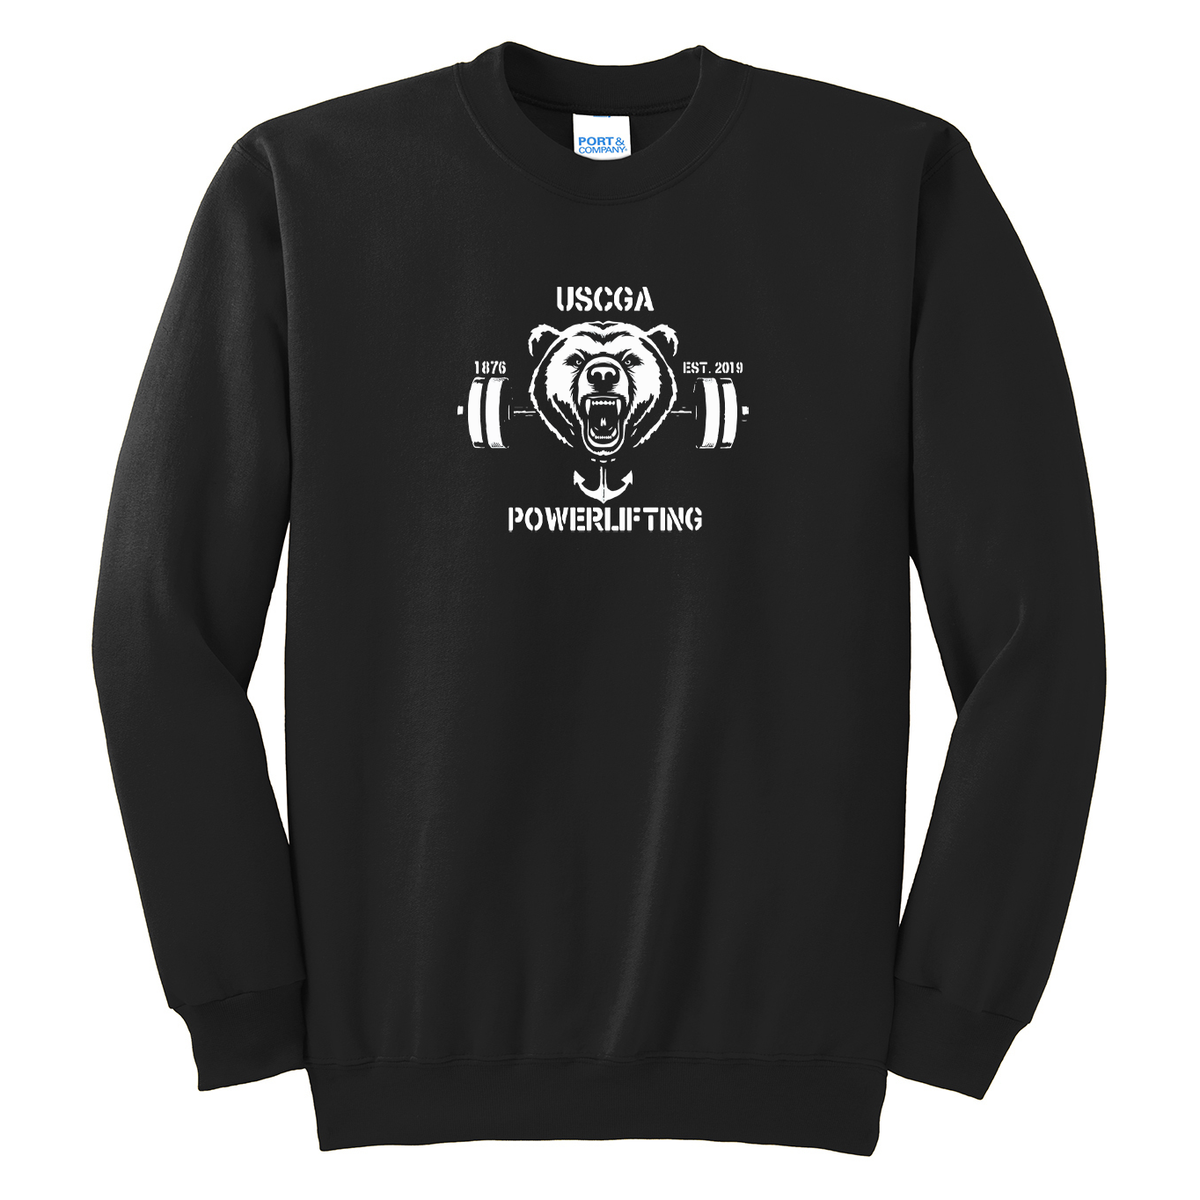 USCGA Powerlifting & Bodybuilding Club Crew Neck Sweater